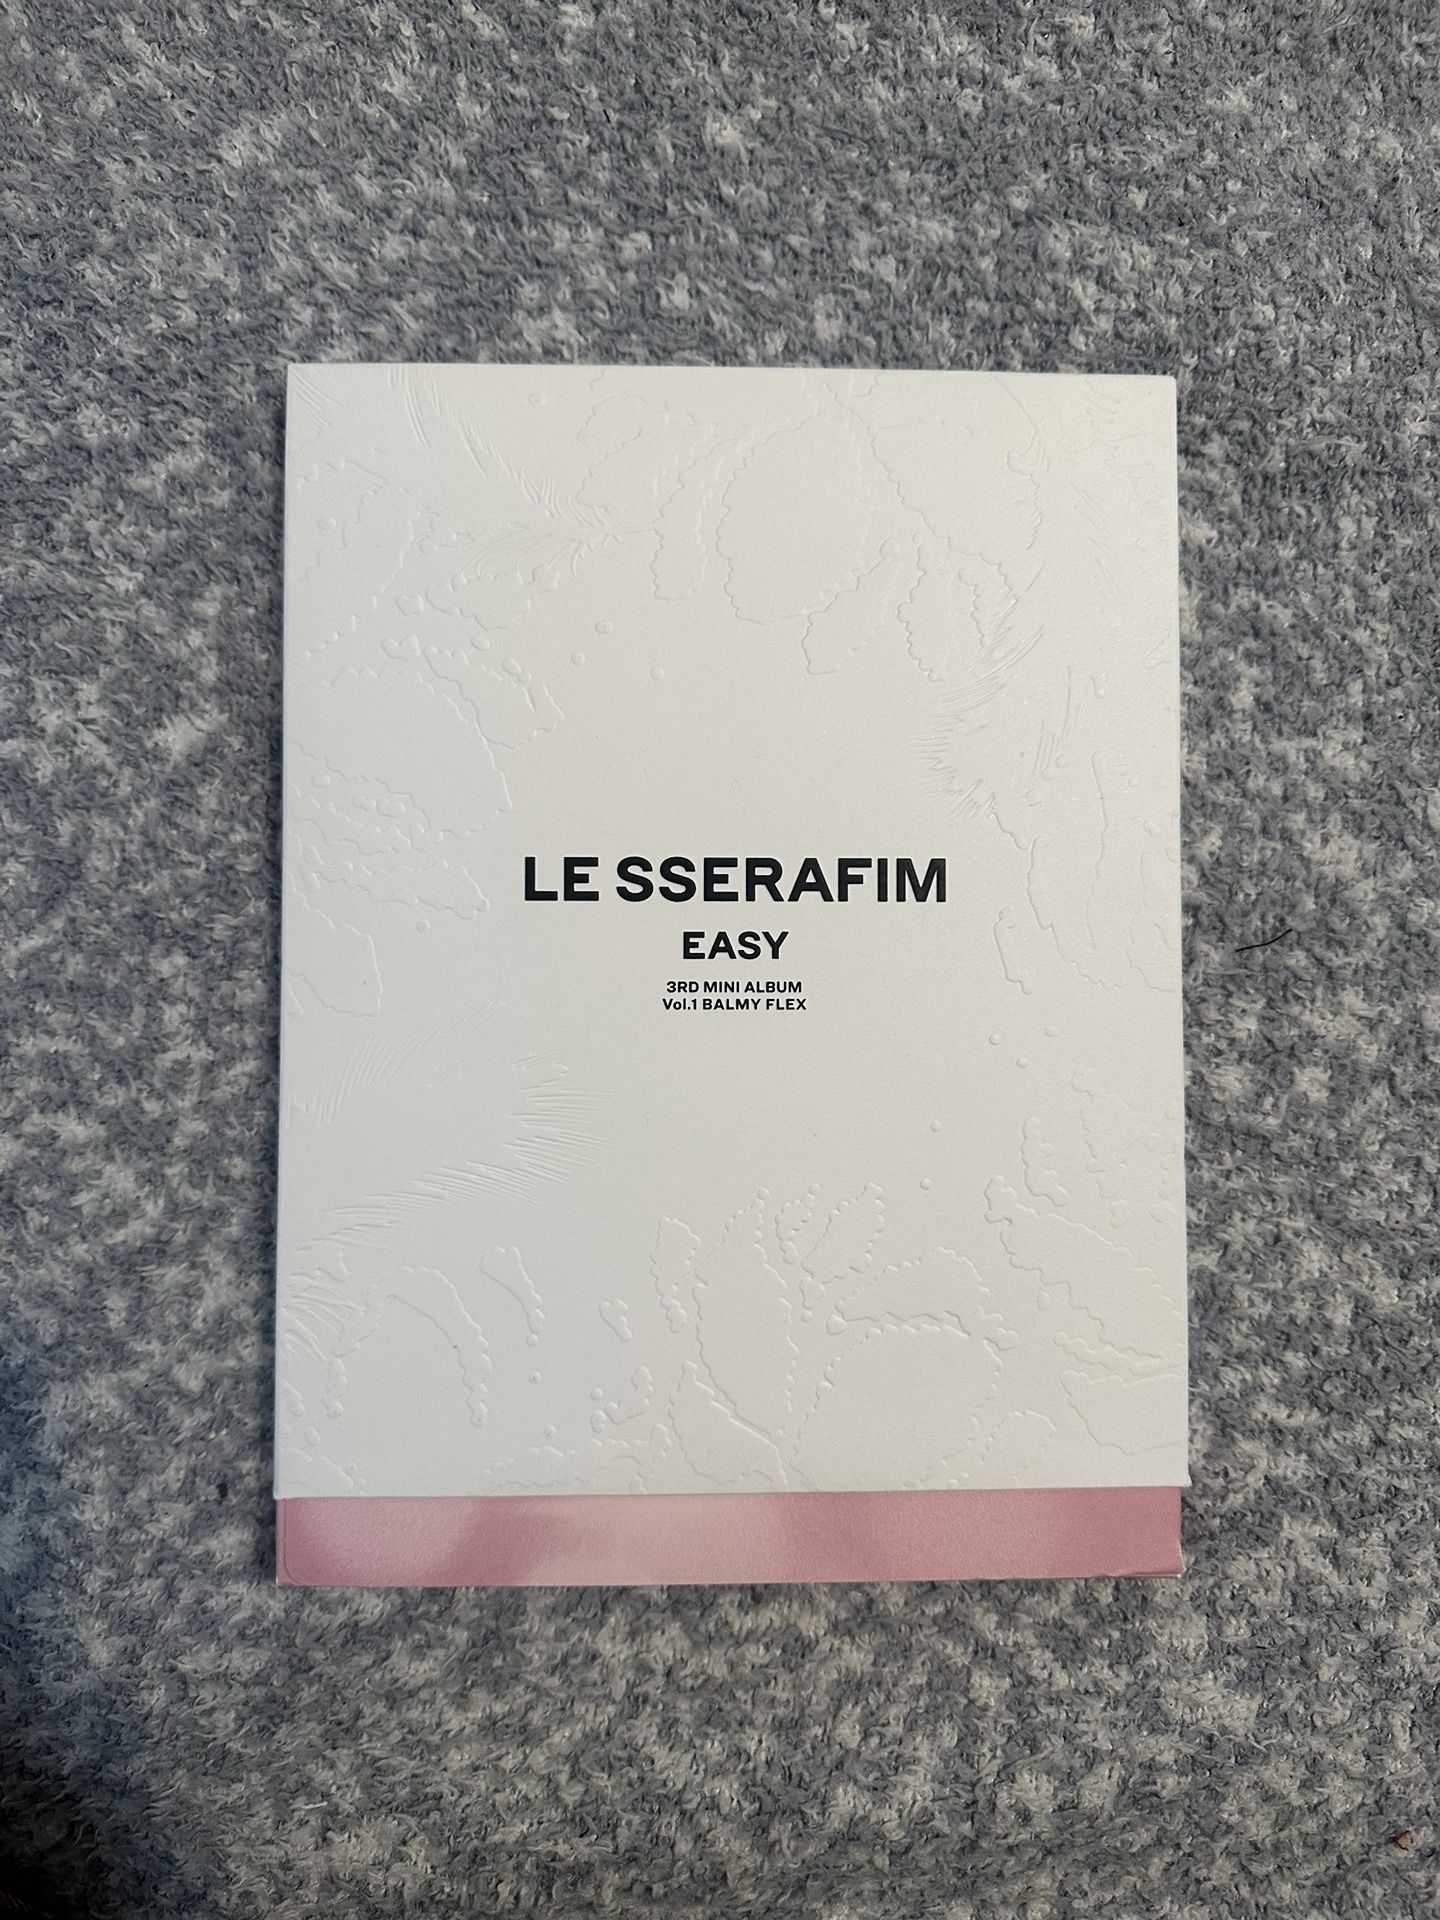 Le Sserafim ‘Easy’ - Vol. 1 Balmy Flex Ver.